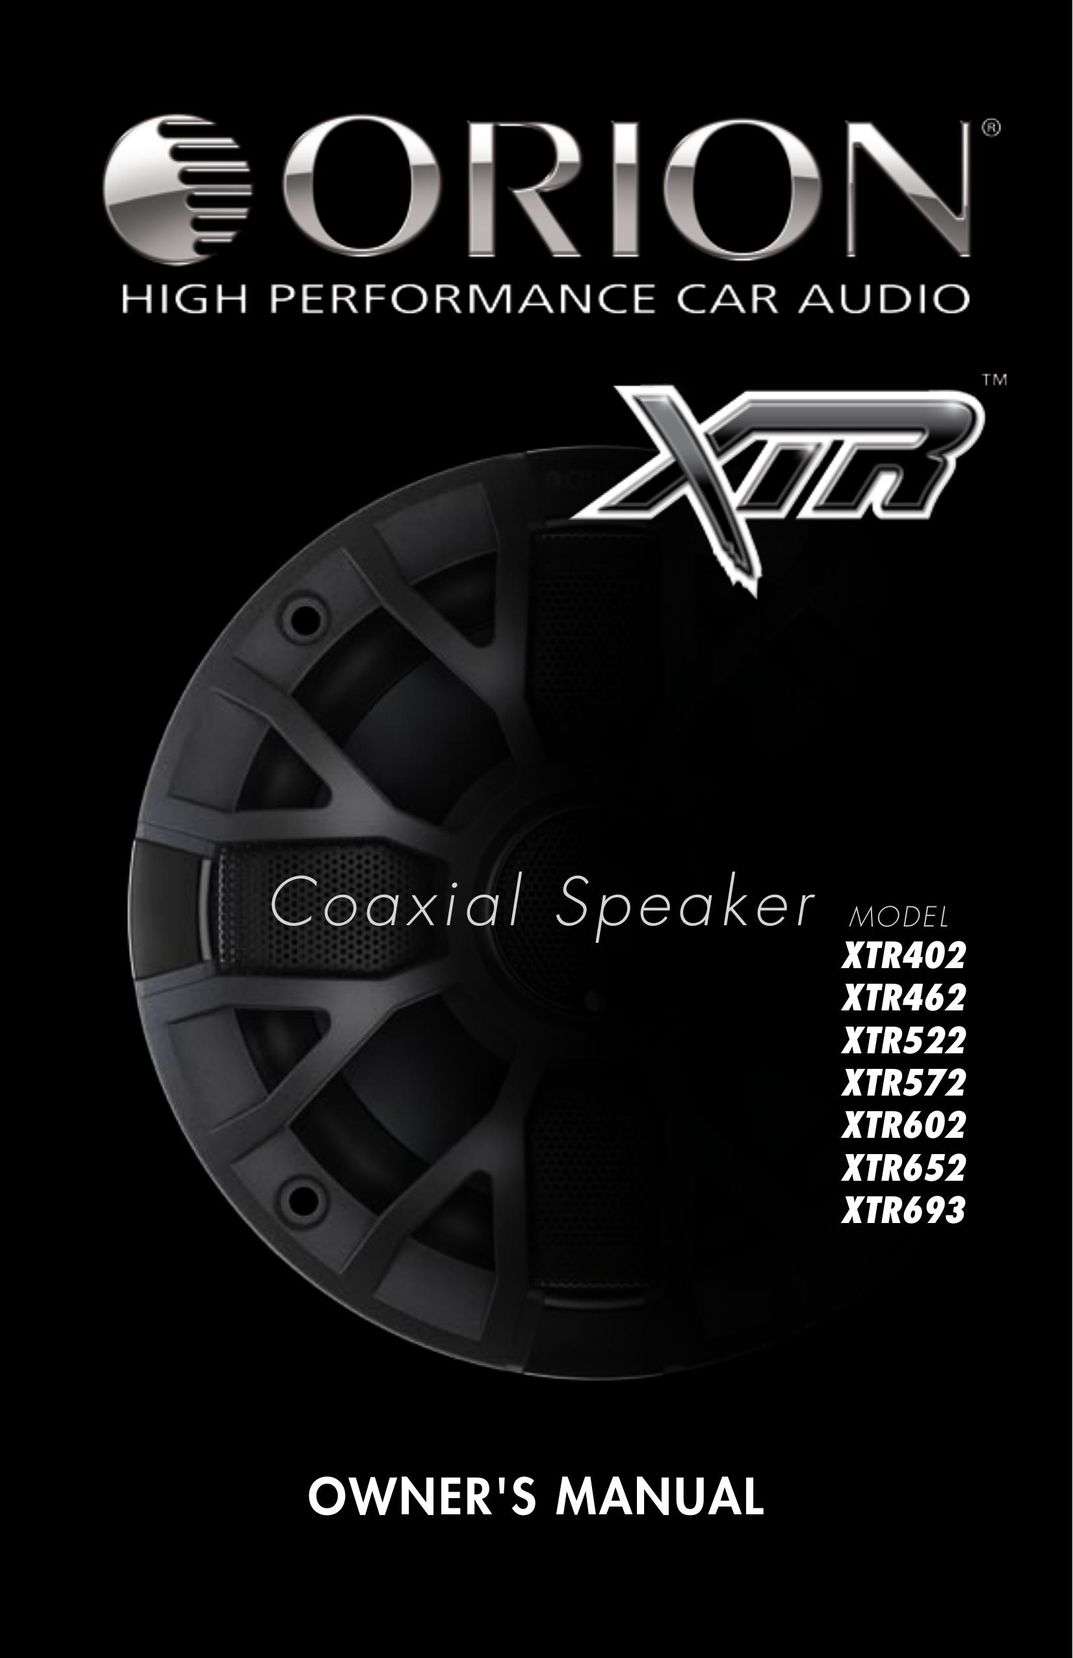 Orion Car Audio XTR522 Car Speaker User Manual